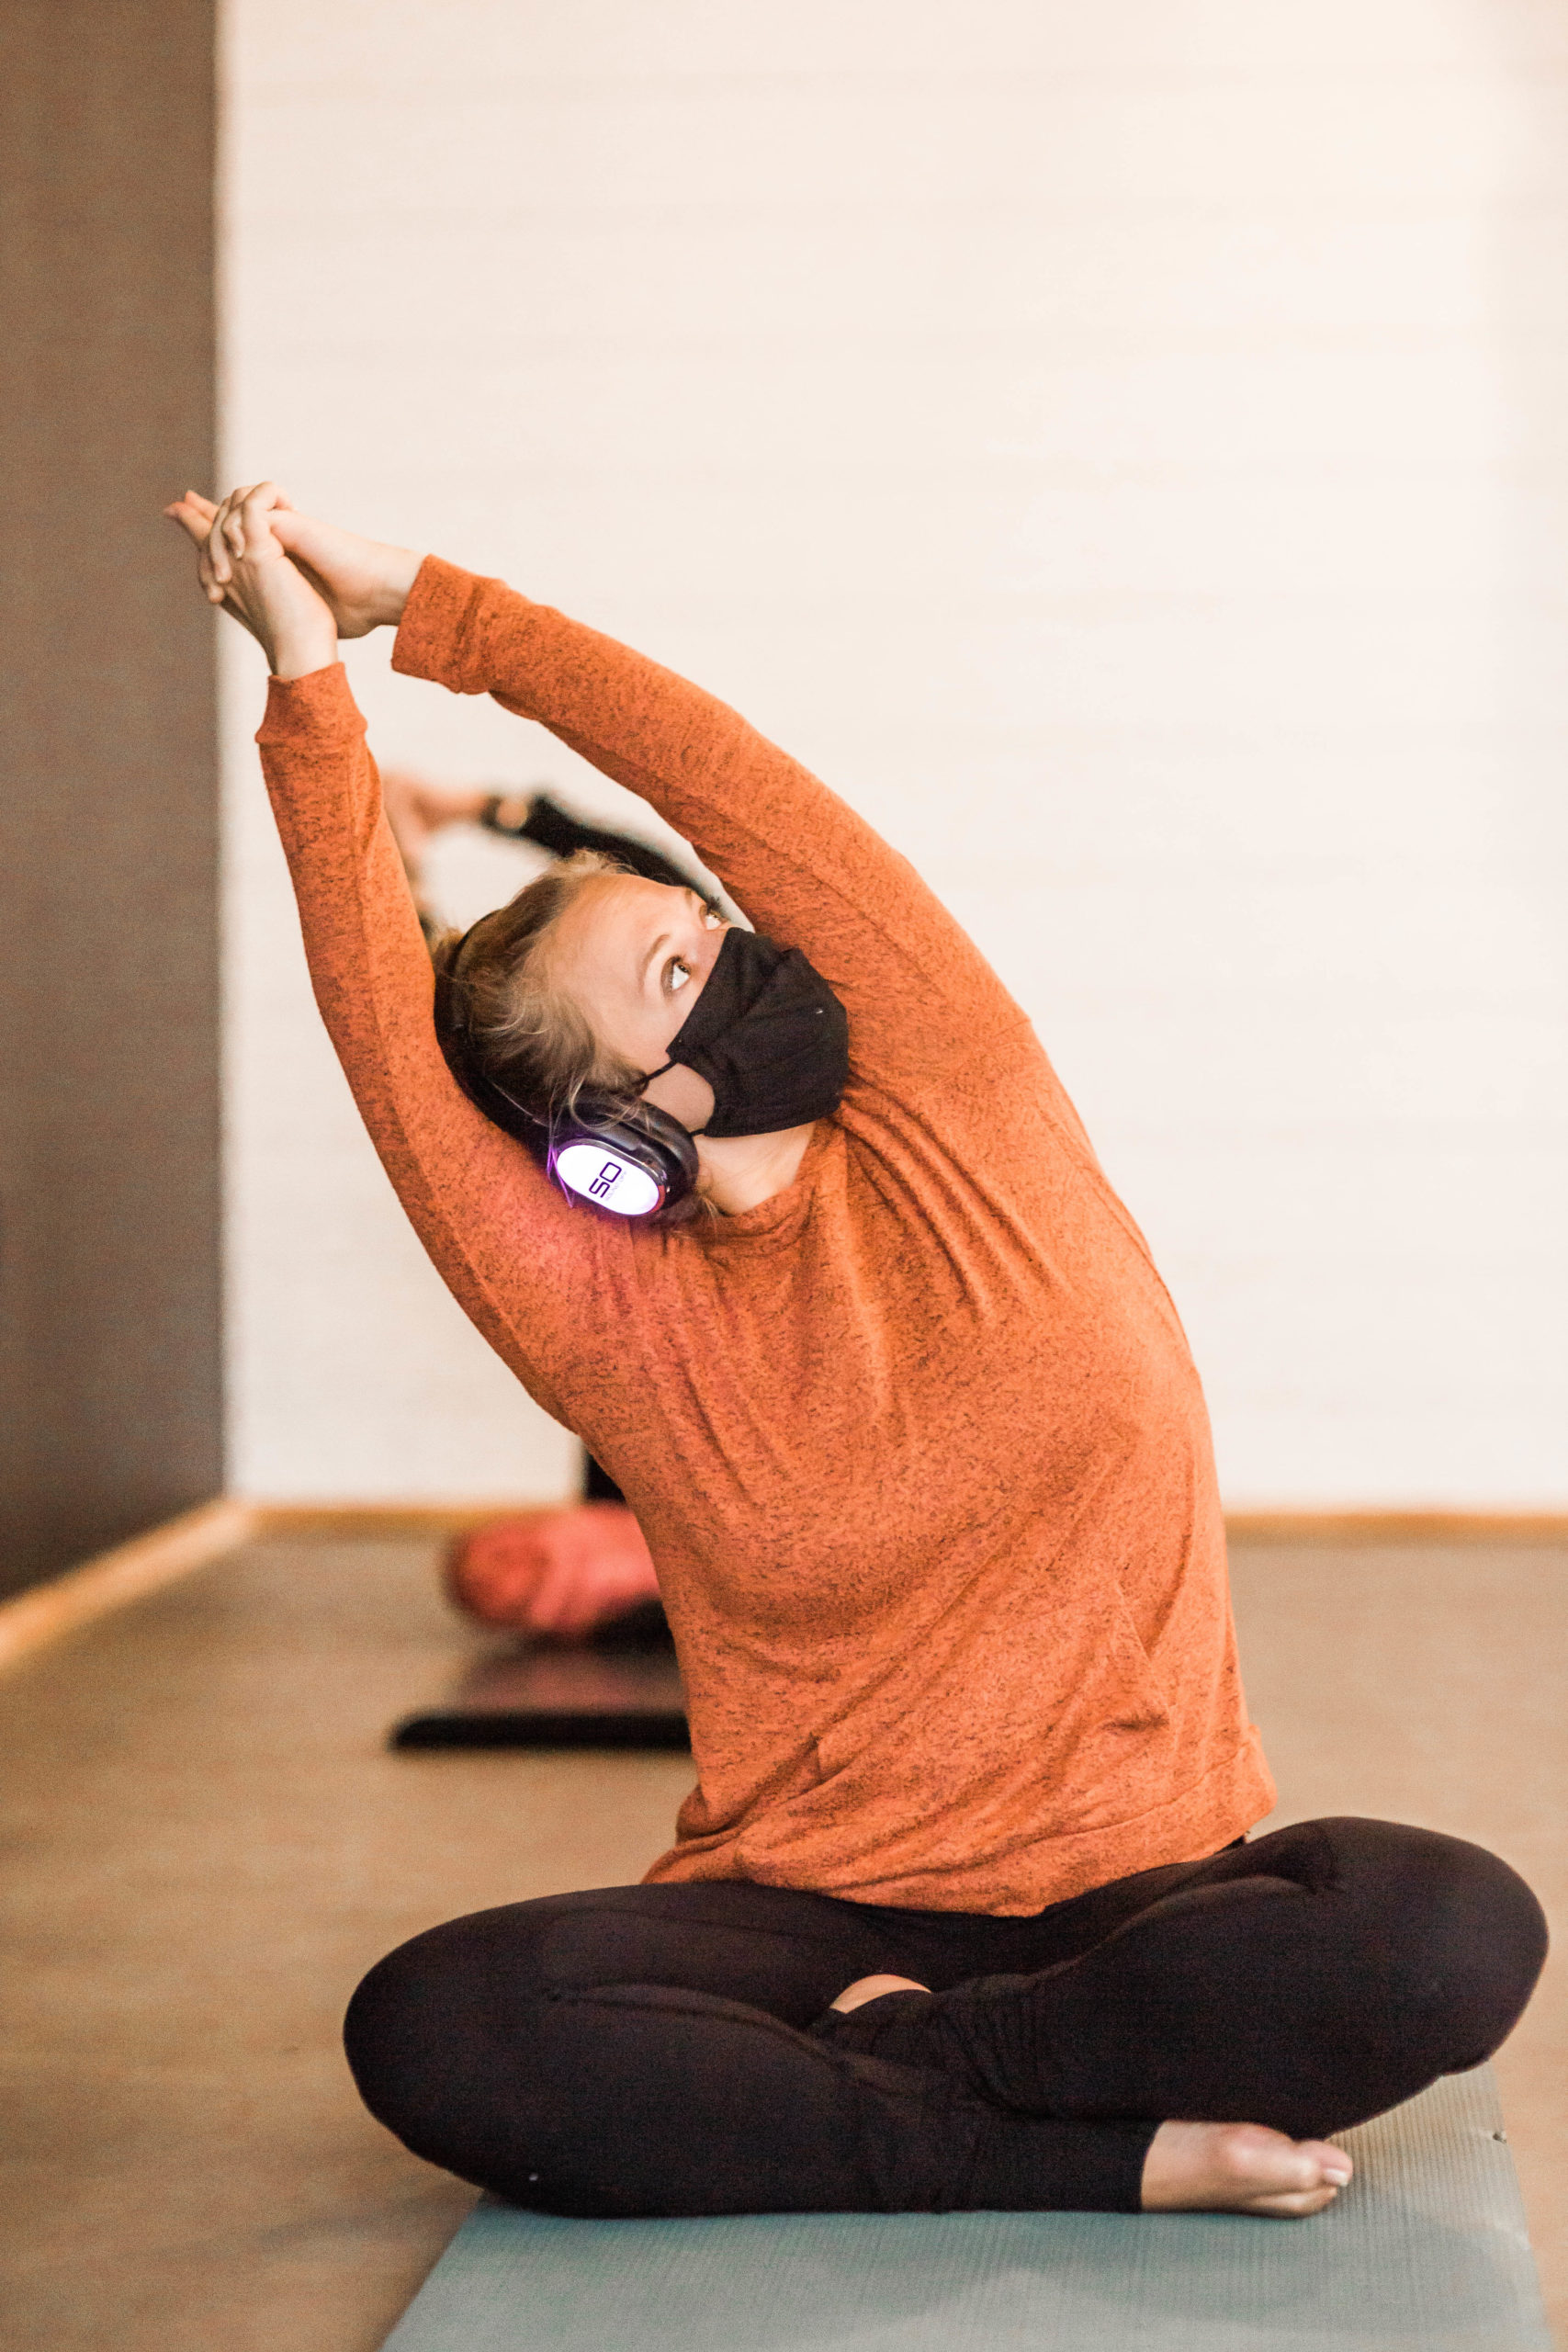 Yogi practicing a pose while wearing silent disco headphones